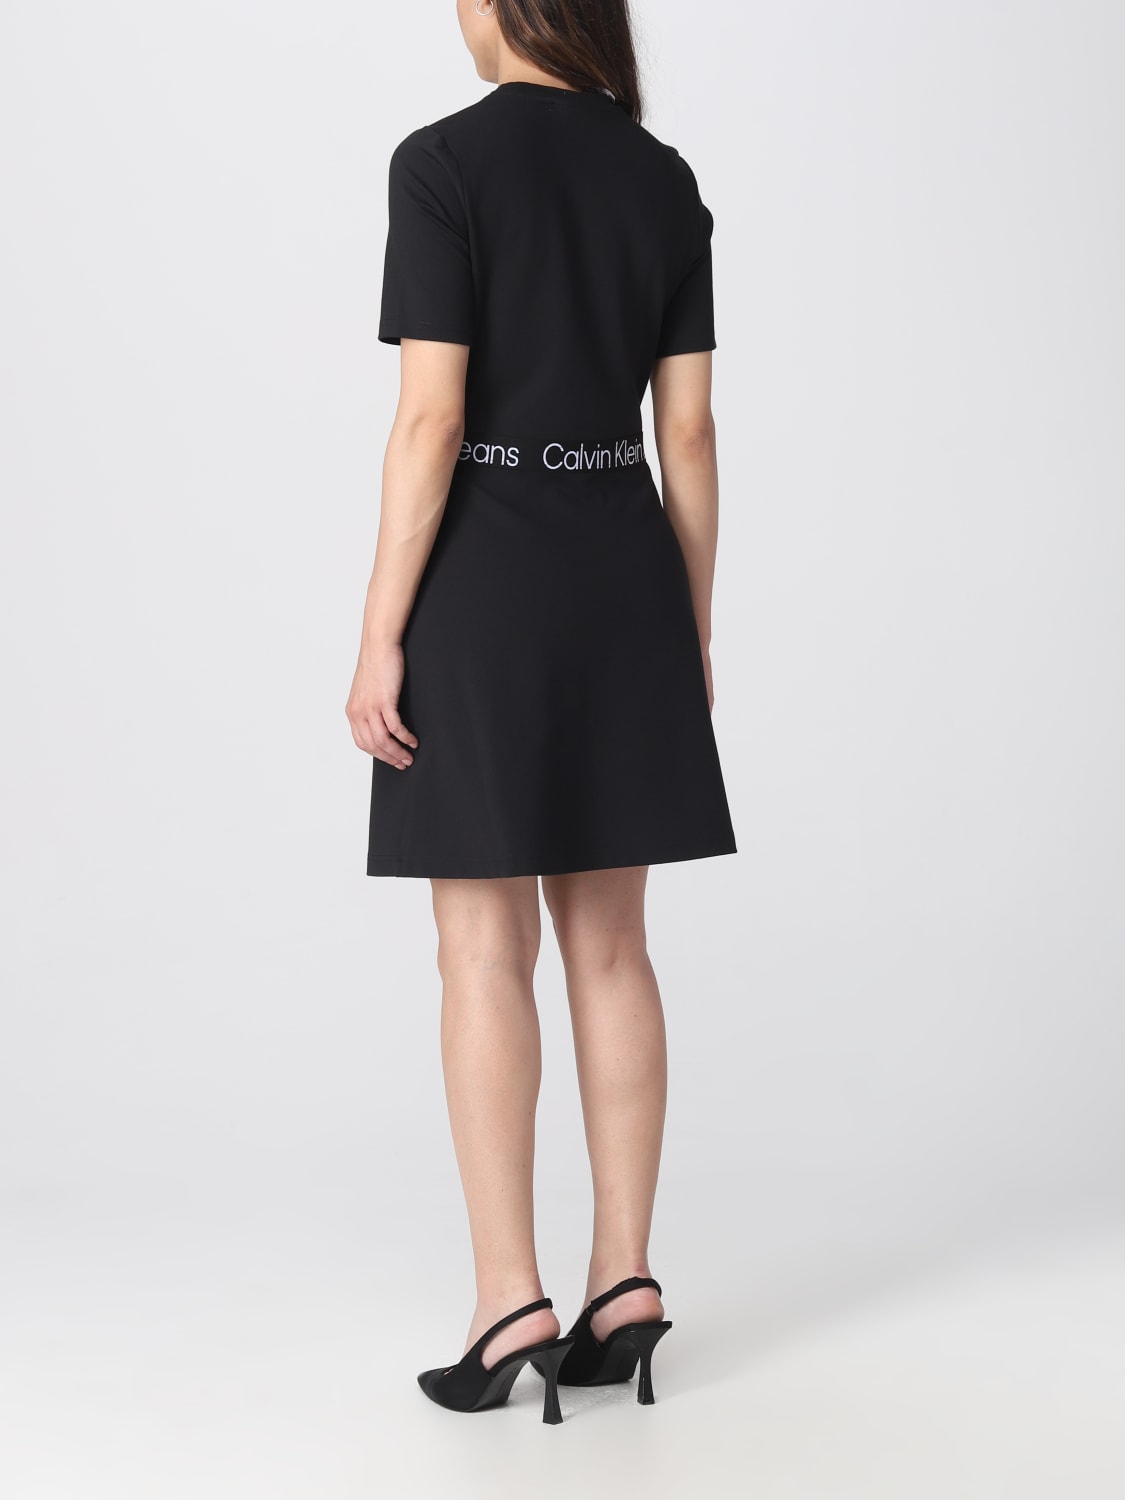 CALVIN KLEIN JEANS: dress for woman - Black | Calvin Klein Jeans dress  J20J221408 online at